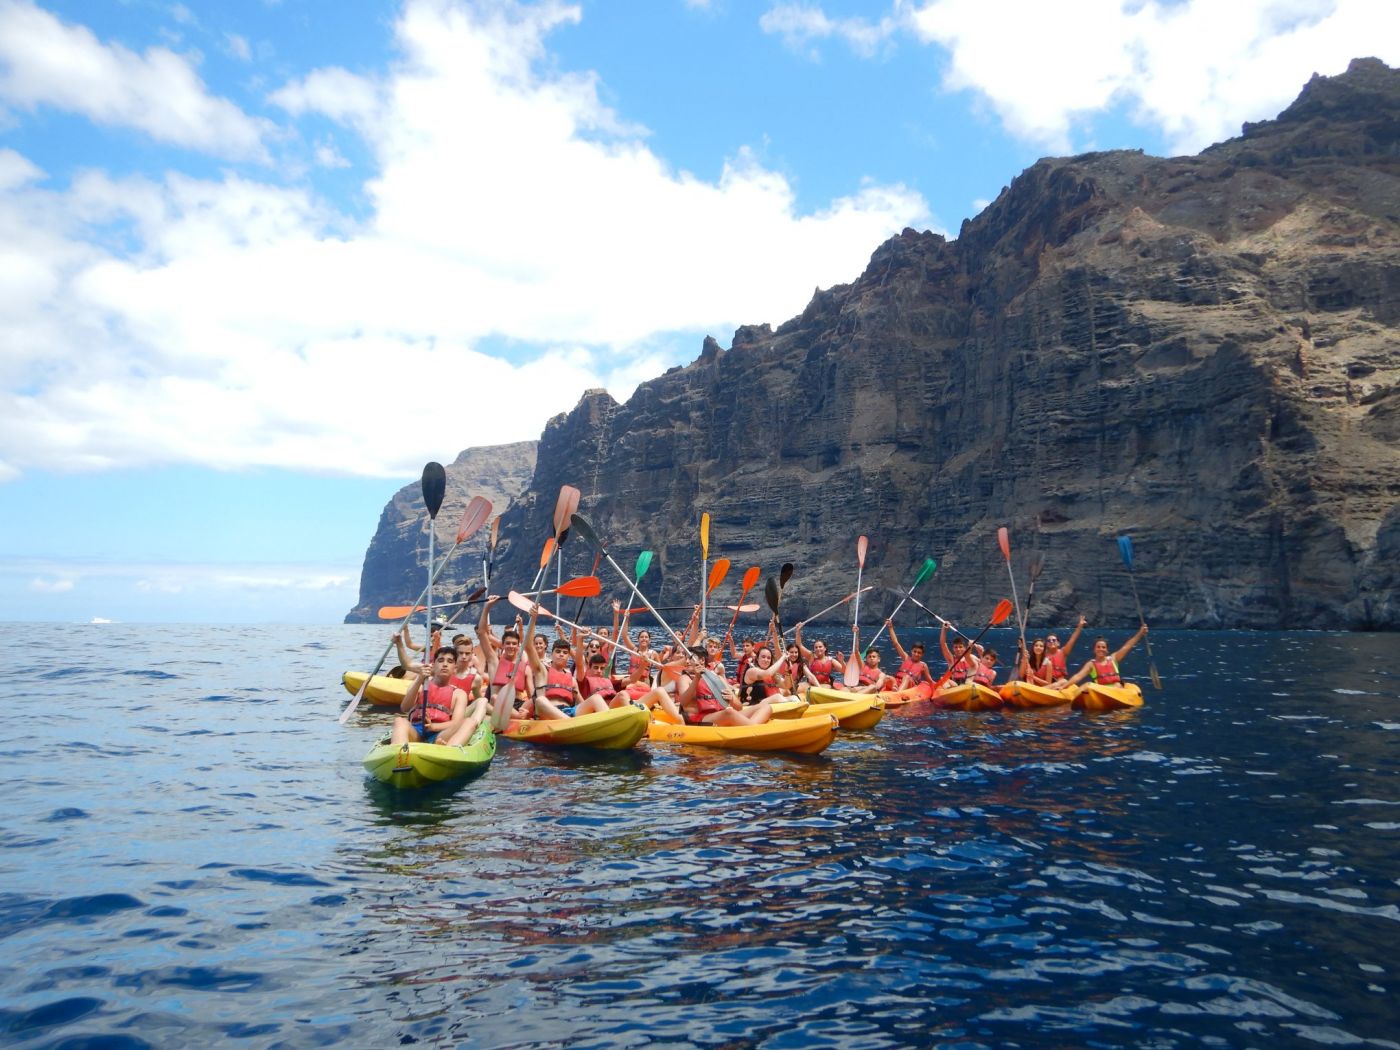 Group of people kayaking in Tenerife - Cliff of Los Gigantes